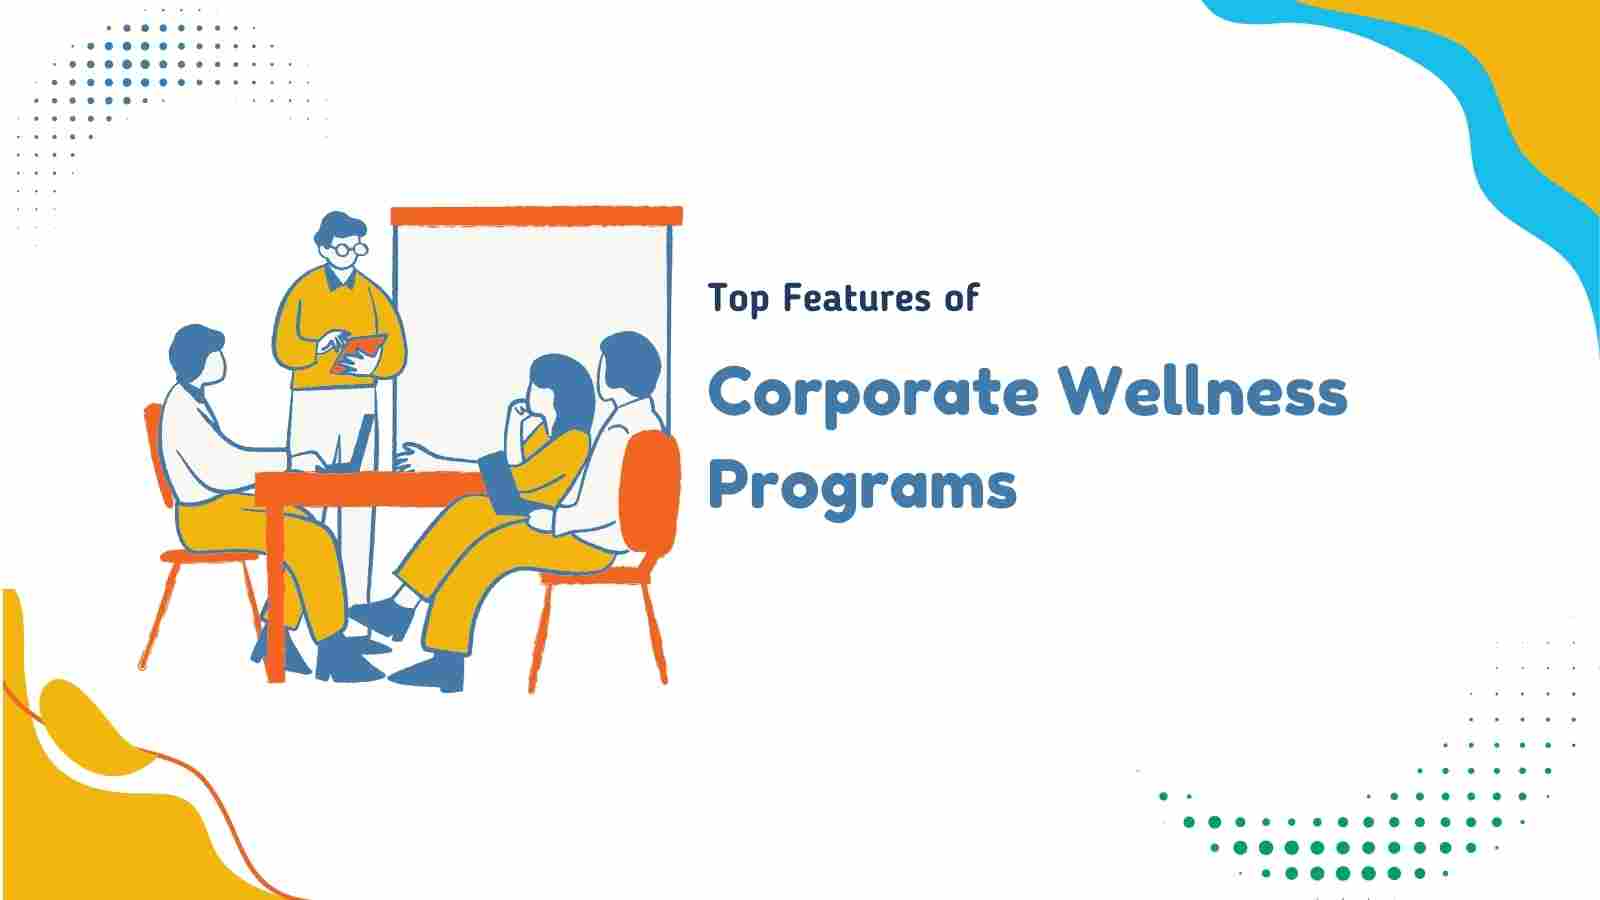 Top Features of Corporate Wellness Programs